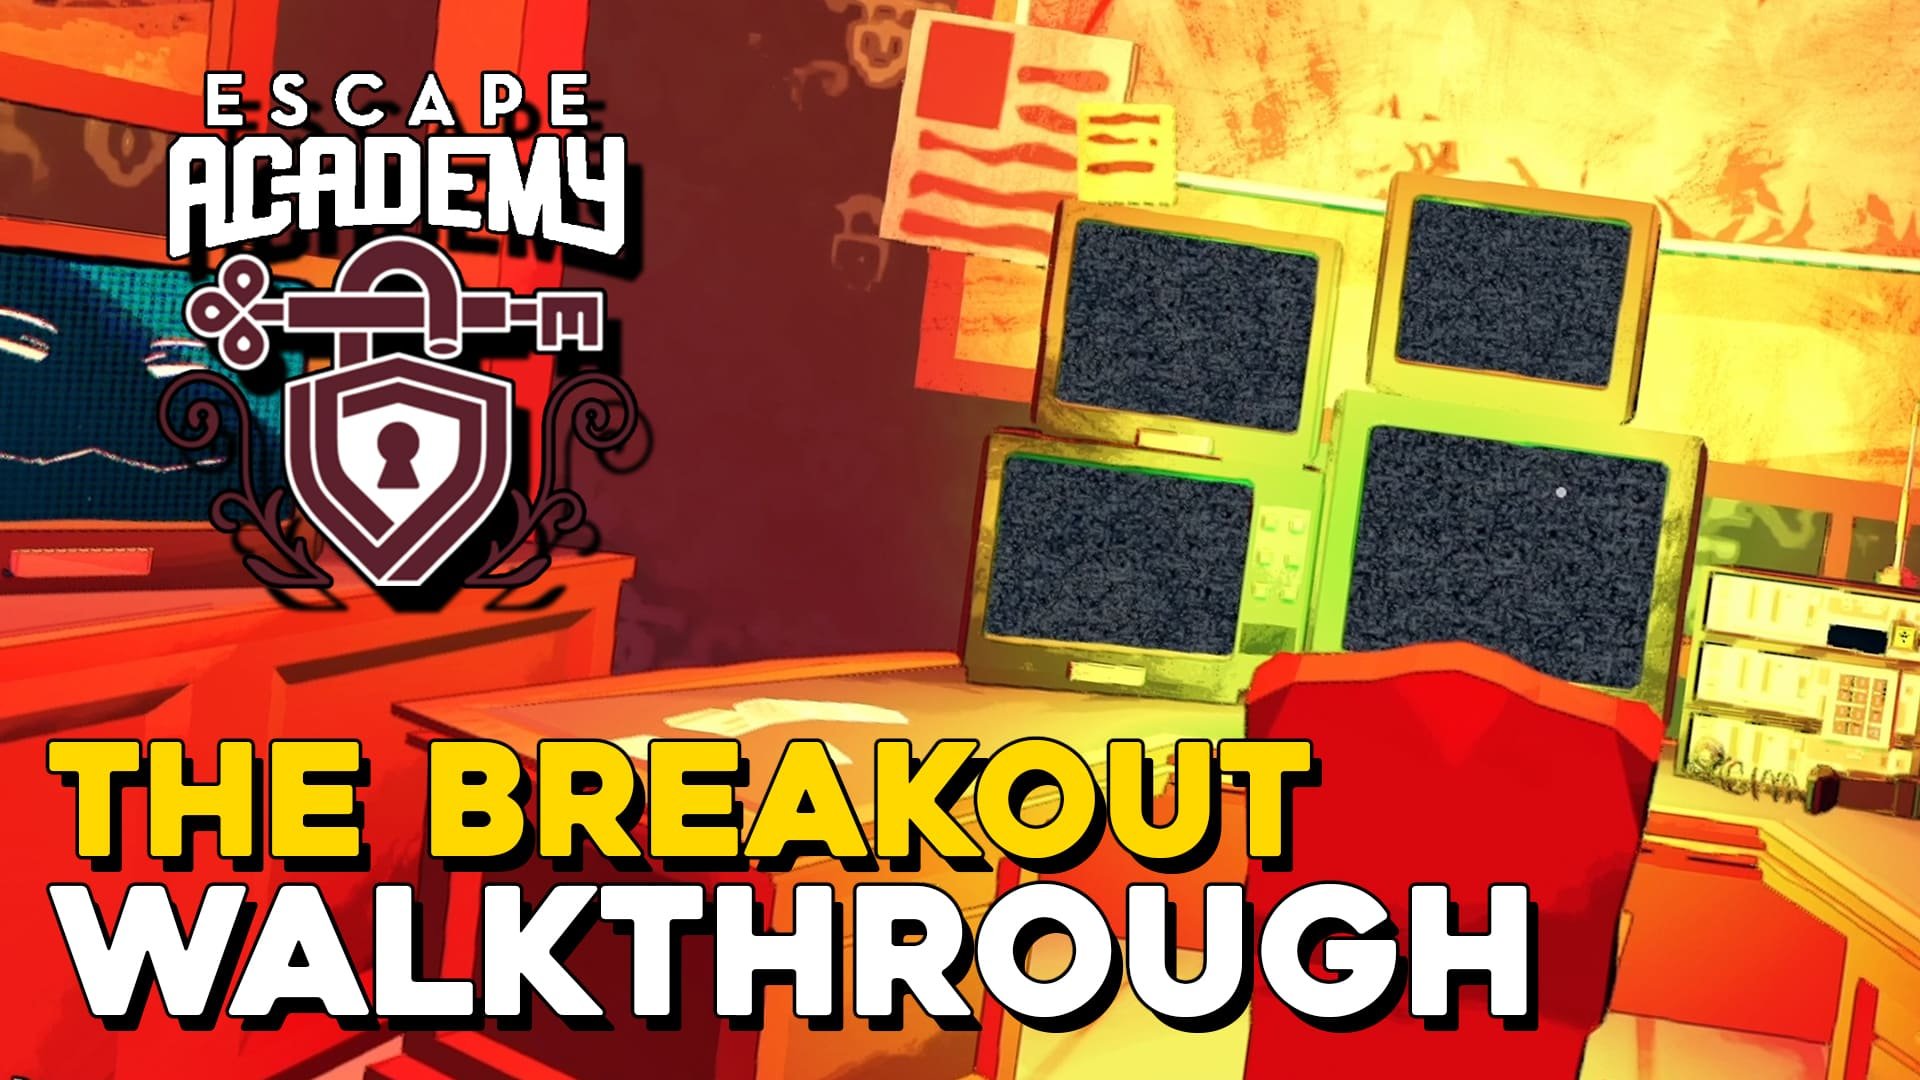 Escape Academy The Breakout Walkthrough (copia) (copia)